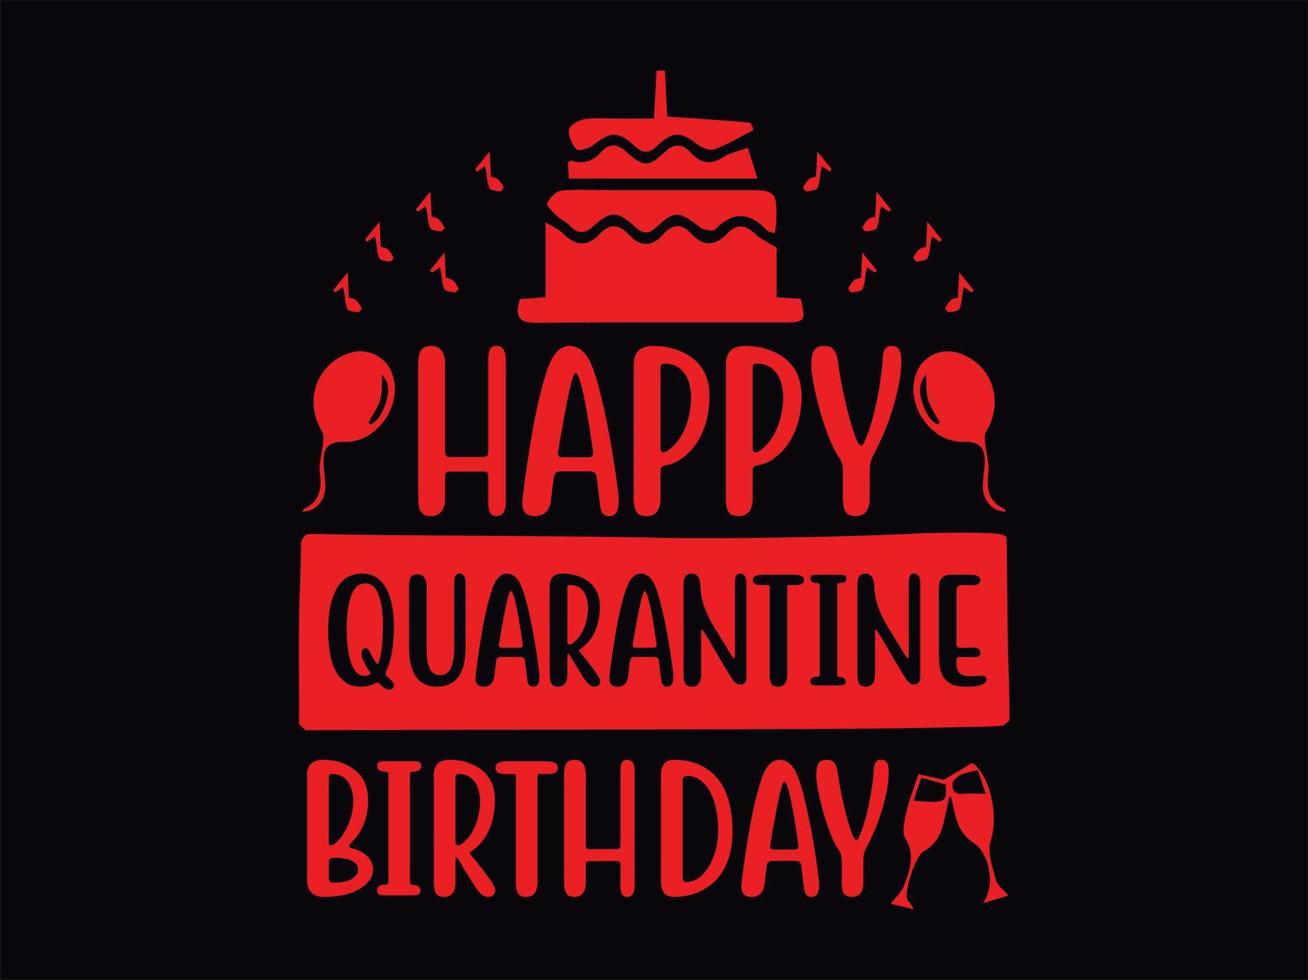 Quarantine t-shirt design file vector